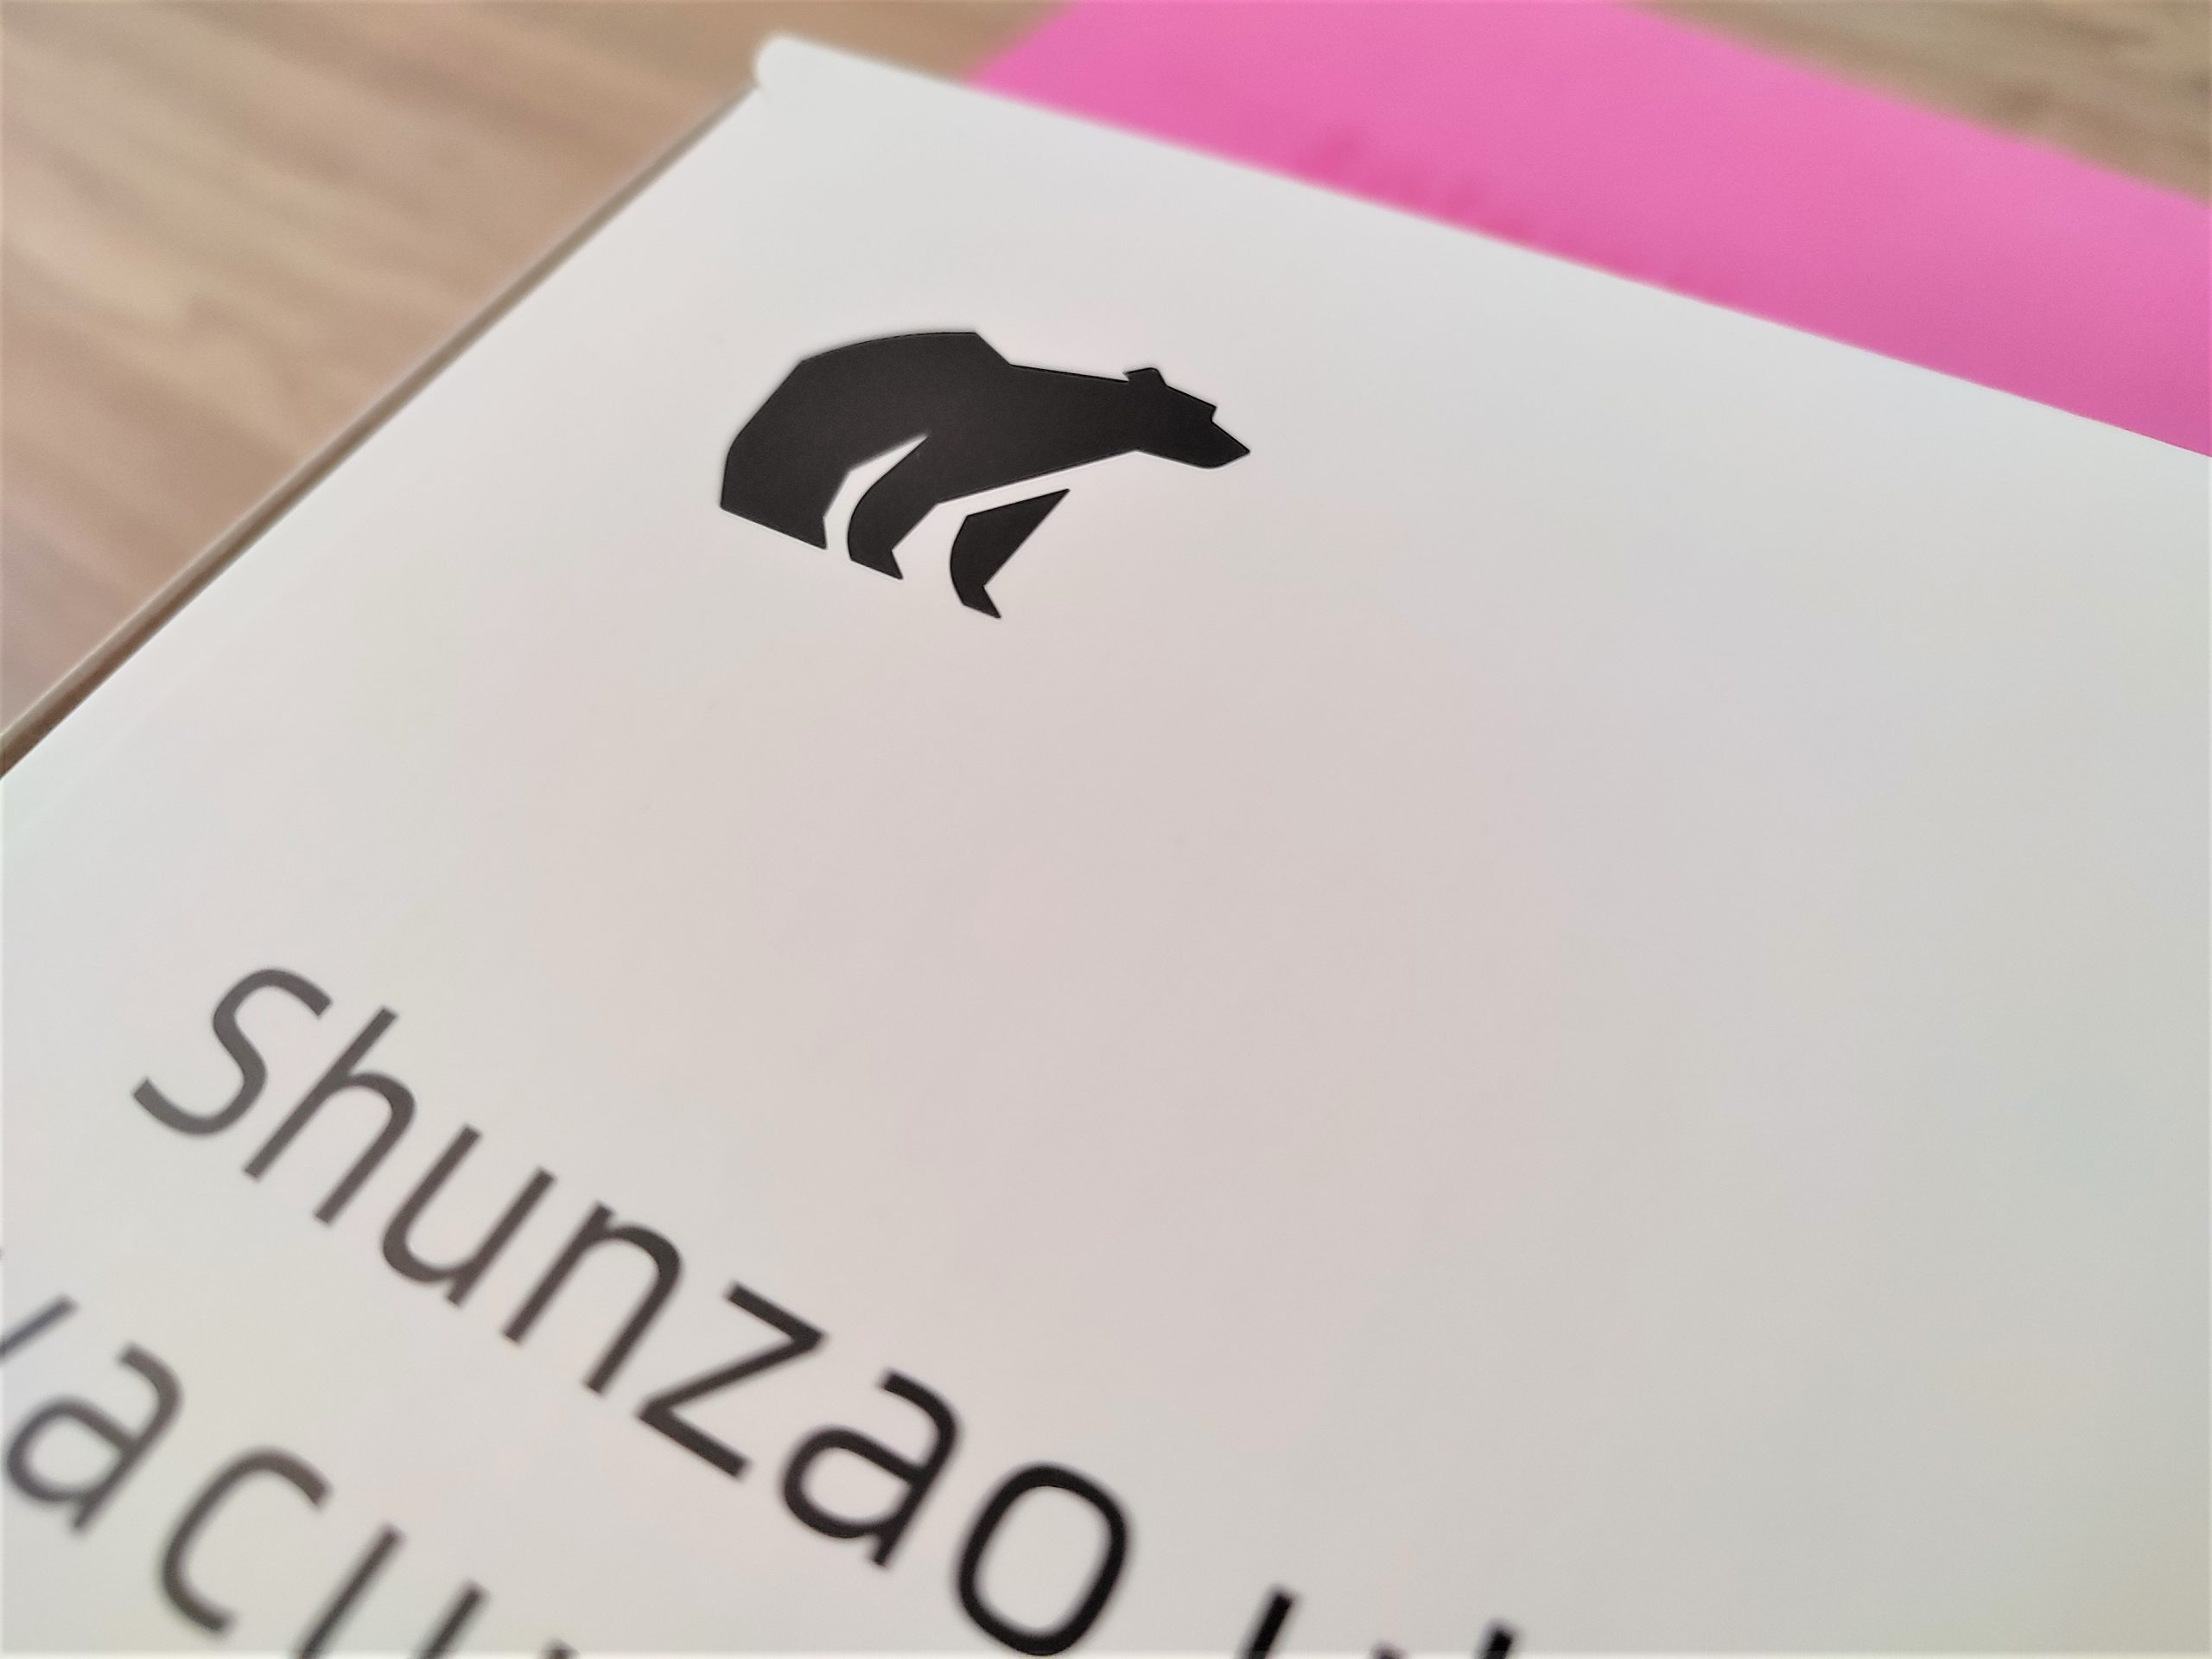 Shunzao L1 Akkusauger Logo auf Verpackung